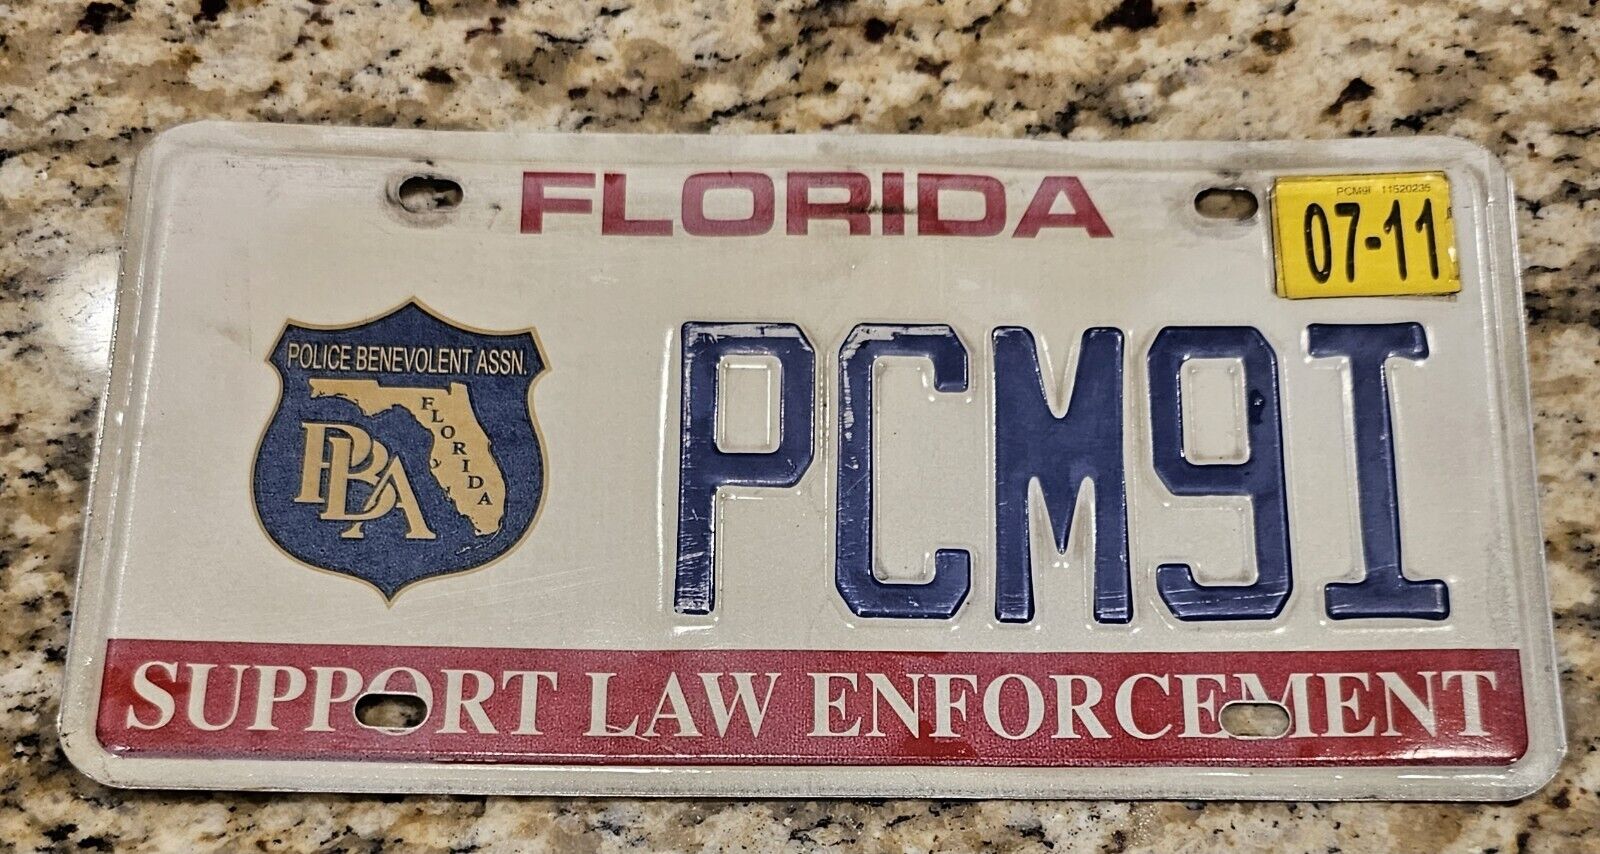  Florida License Plate PBA Police Benevolent Assn. Support Law Enforcement